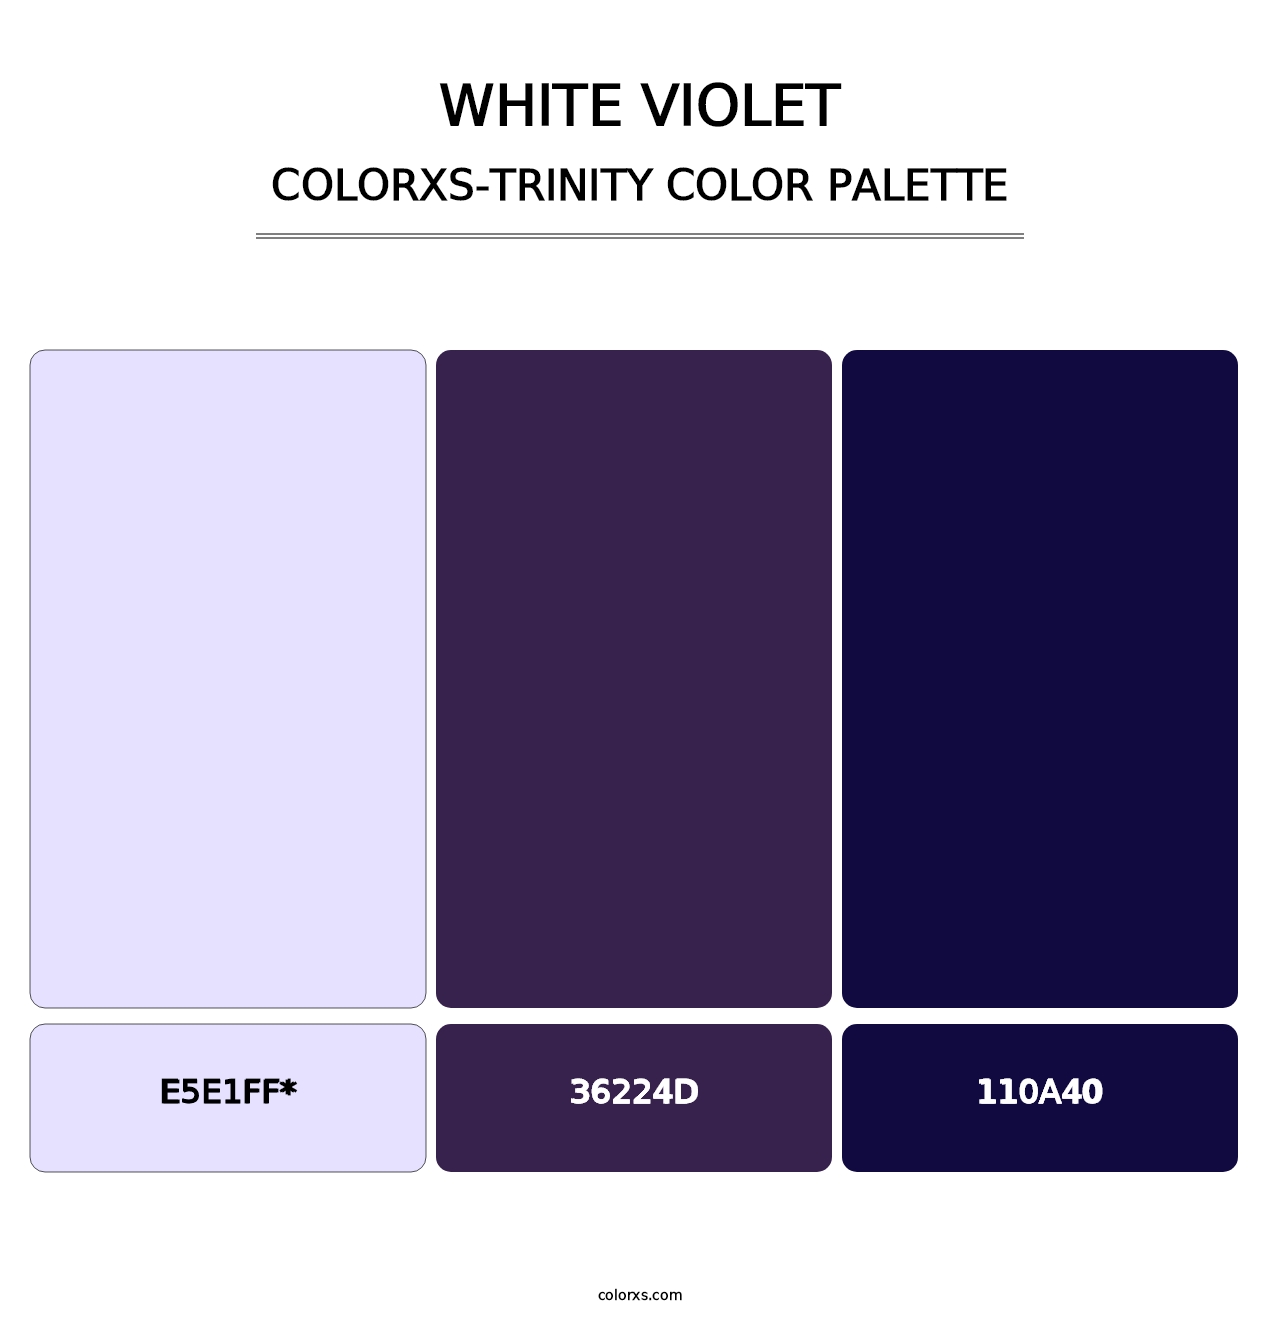 White Violet - Colorxs Trinity Palette